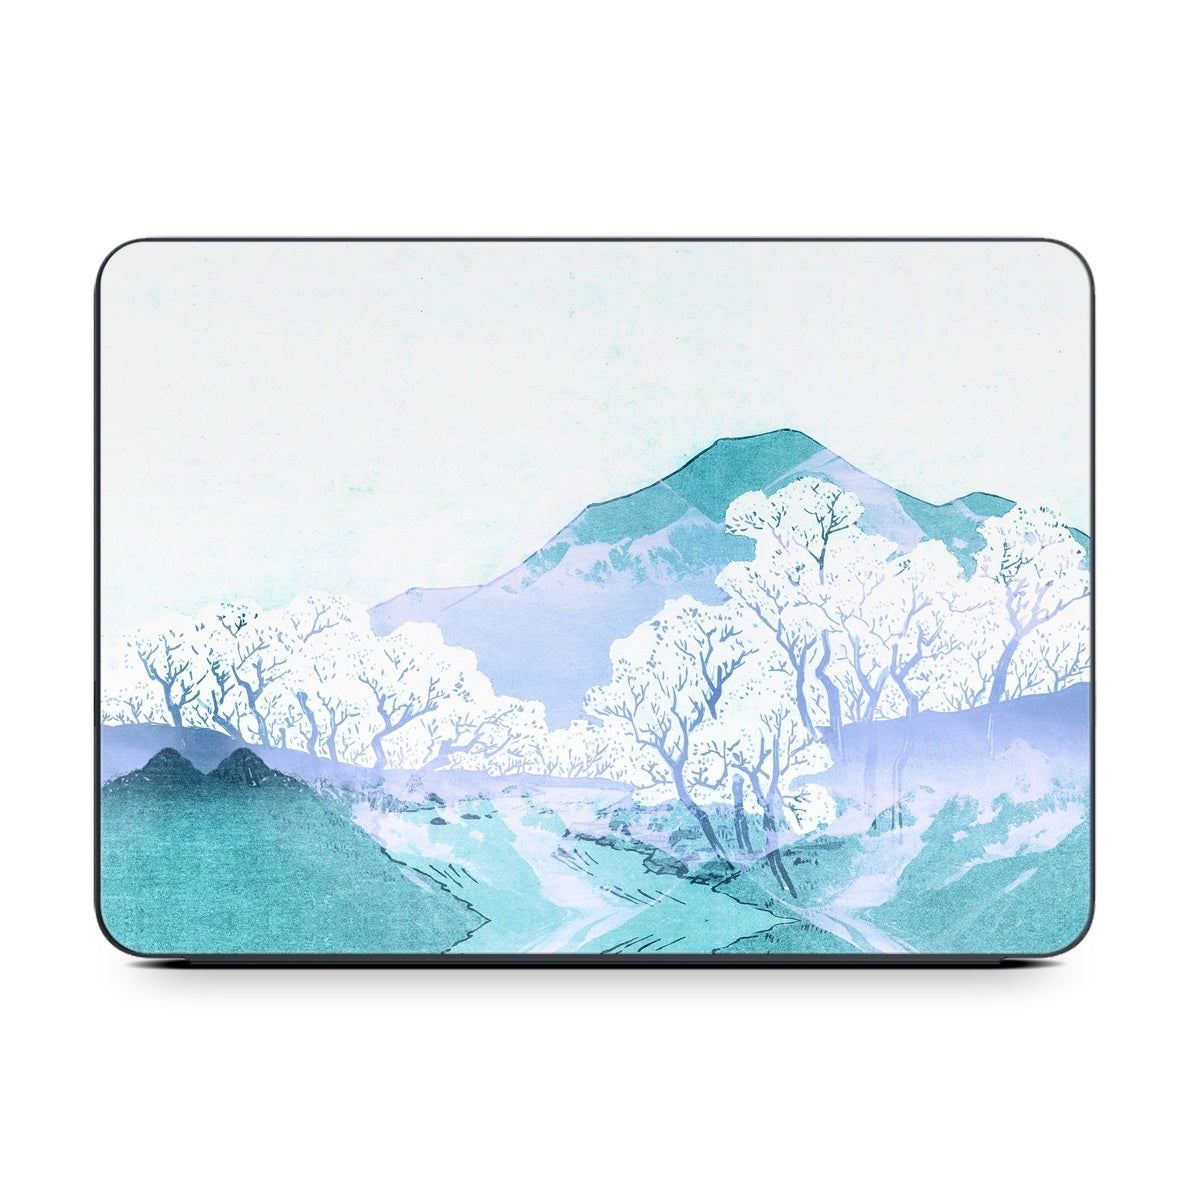 Ghost Mountain - Apple Smart Keyboard Folio Skin